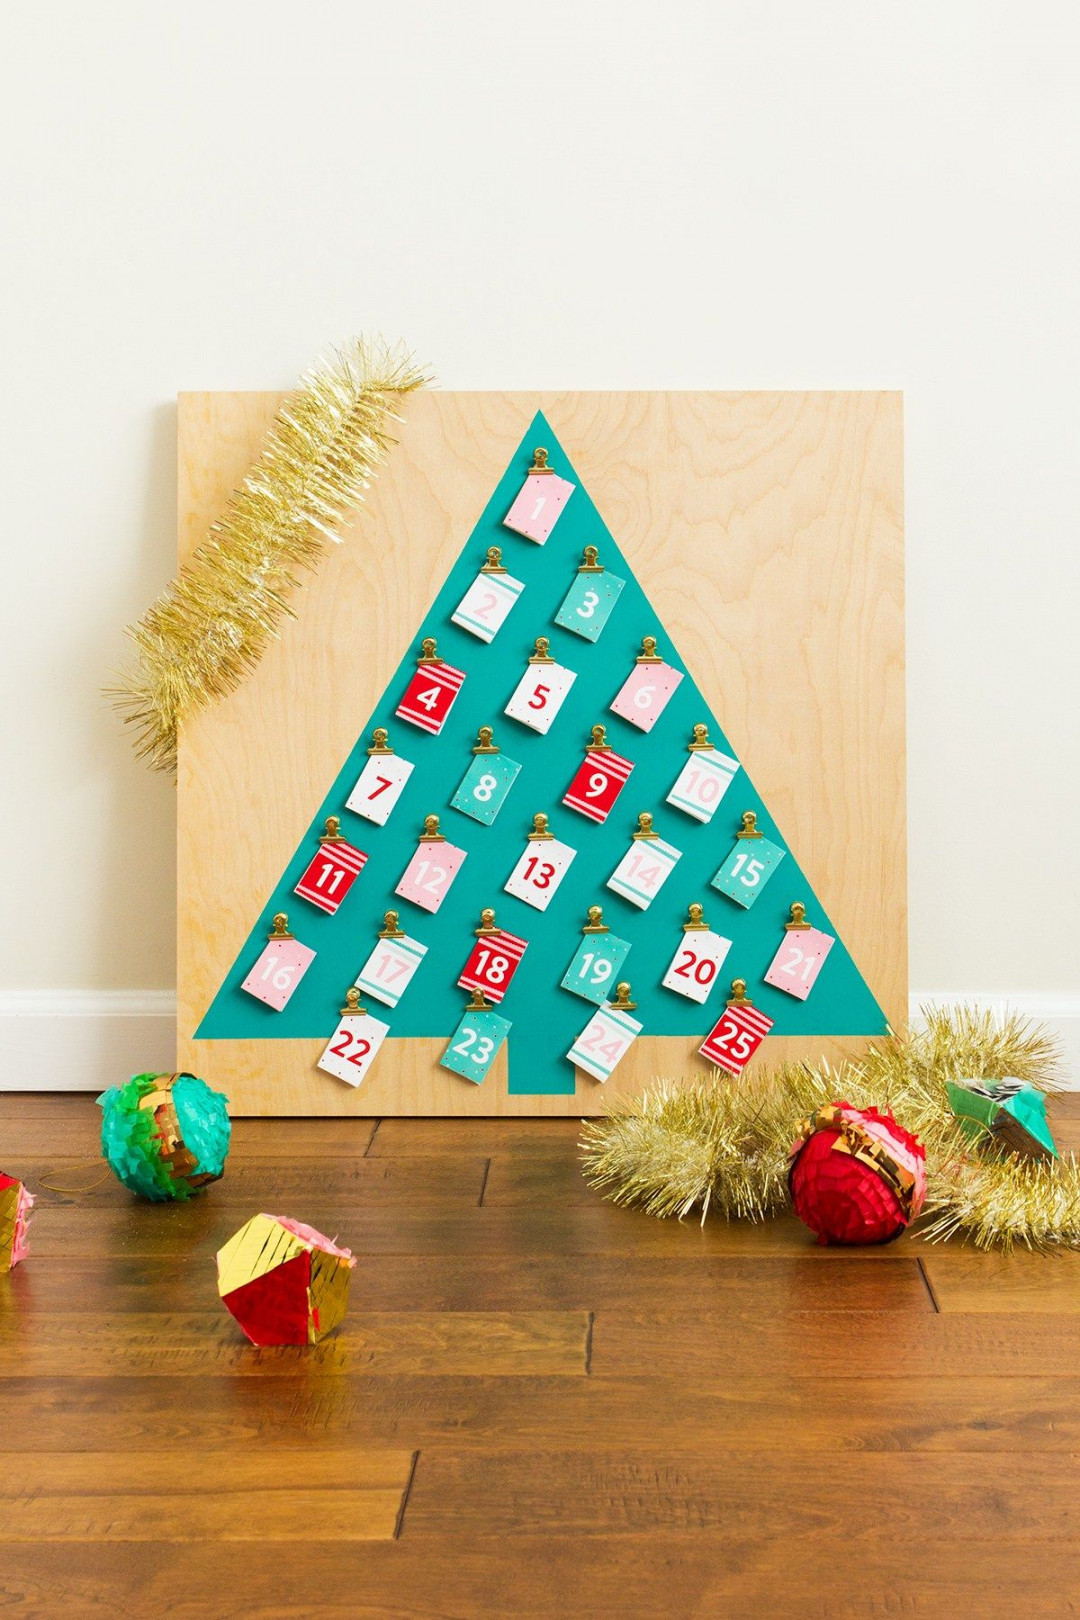 DIY Advent Calendar Ideas - How to Make an Advent Calendar